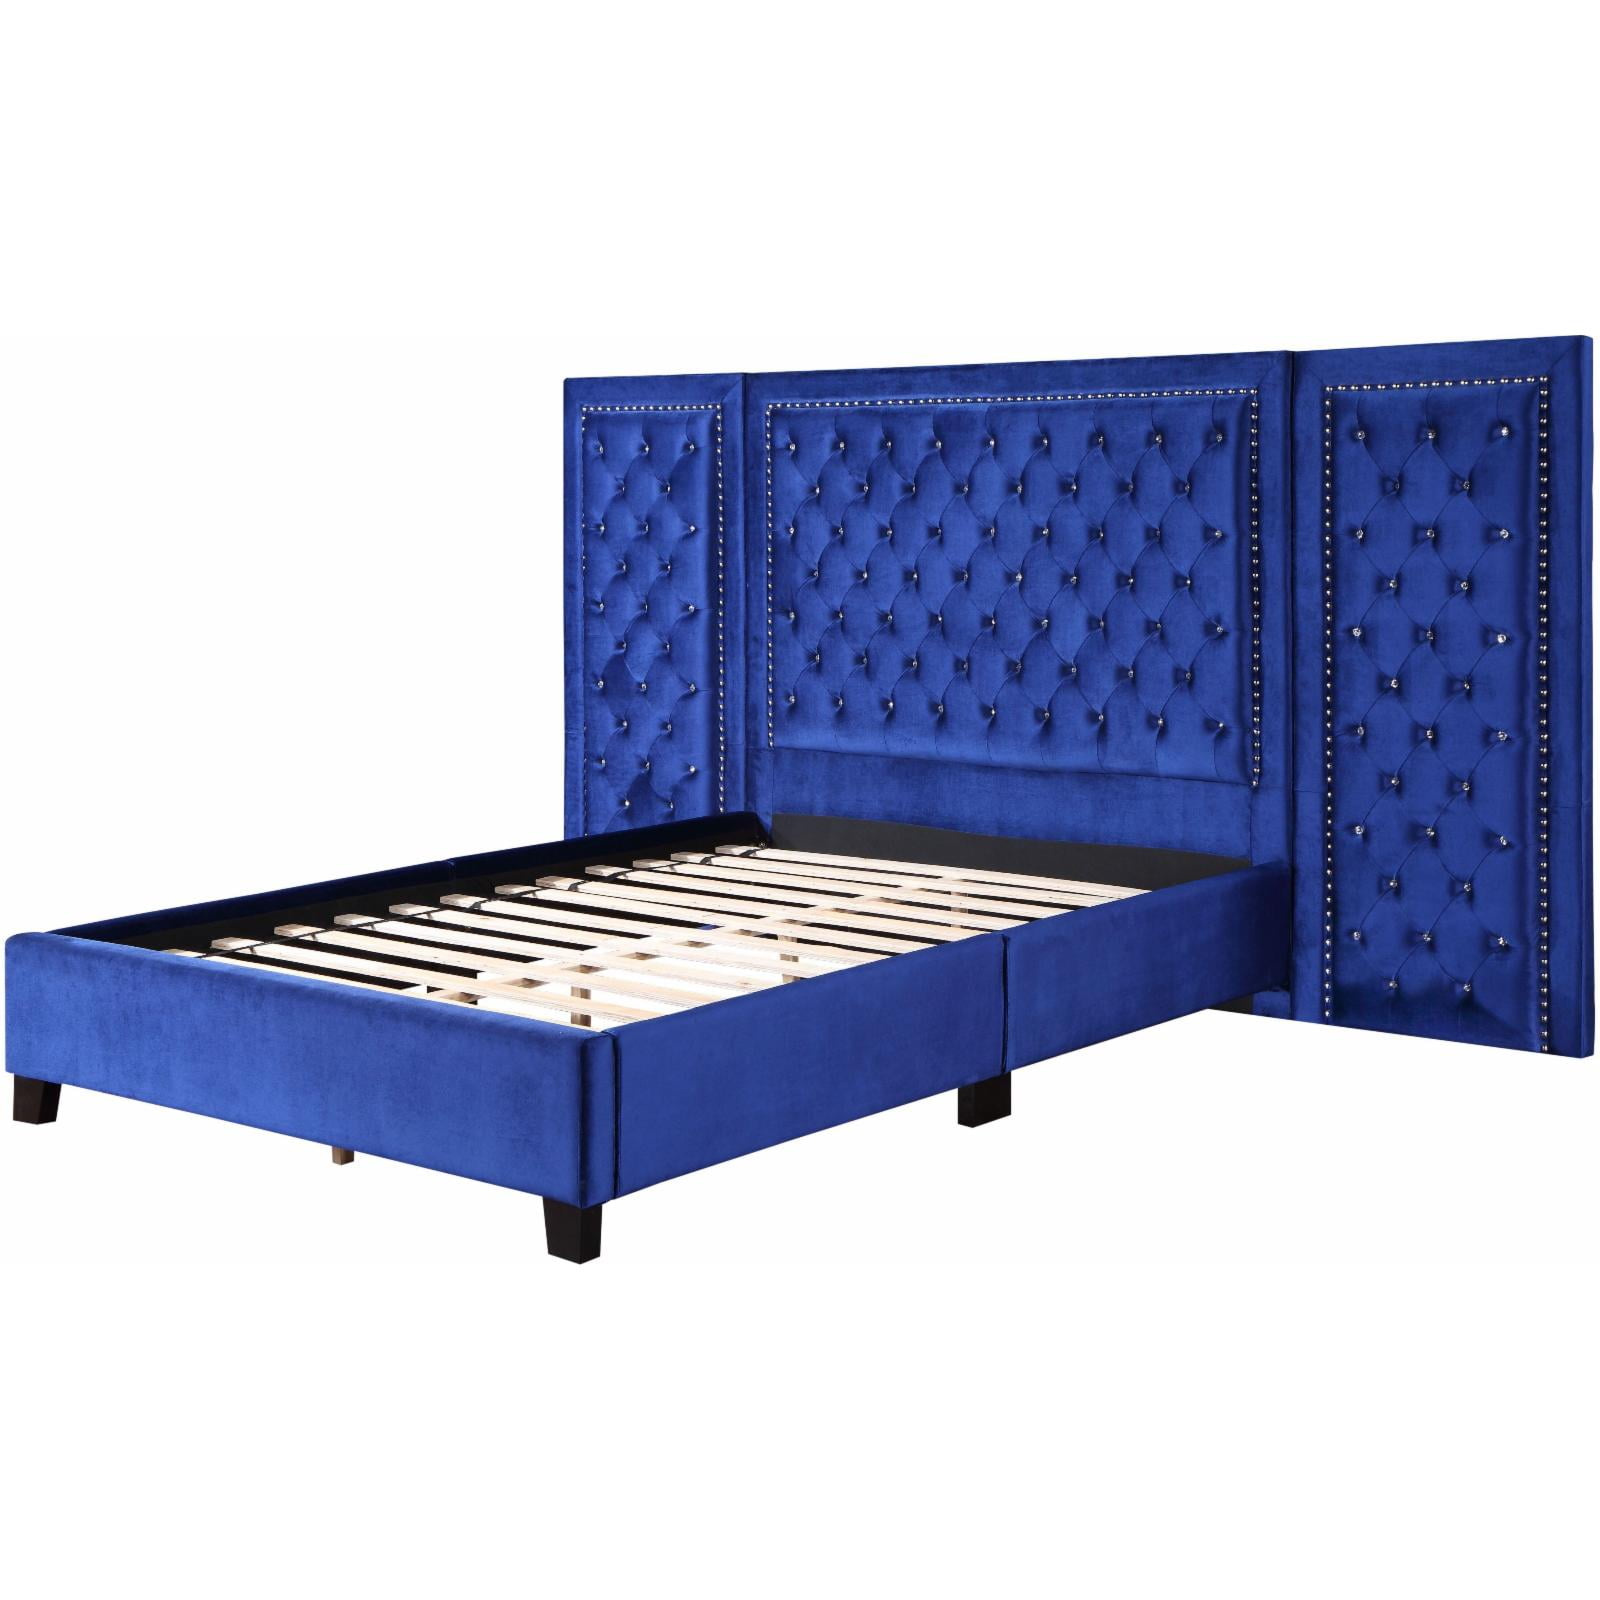 Picture of Acme Furniture BD00972EK 86 x 134 x 61 in. Damazy Eastern Bed, Blue Velvet - King Size